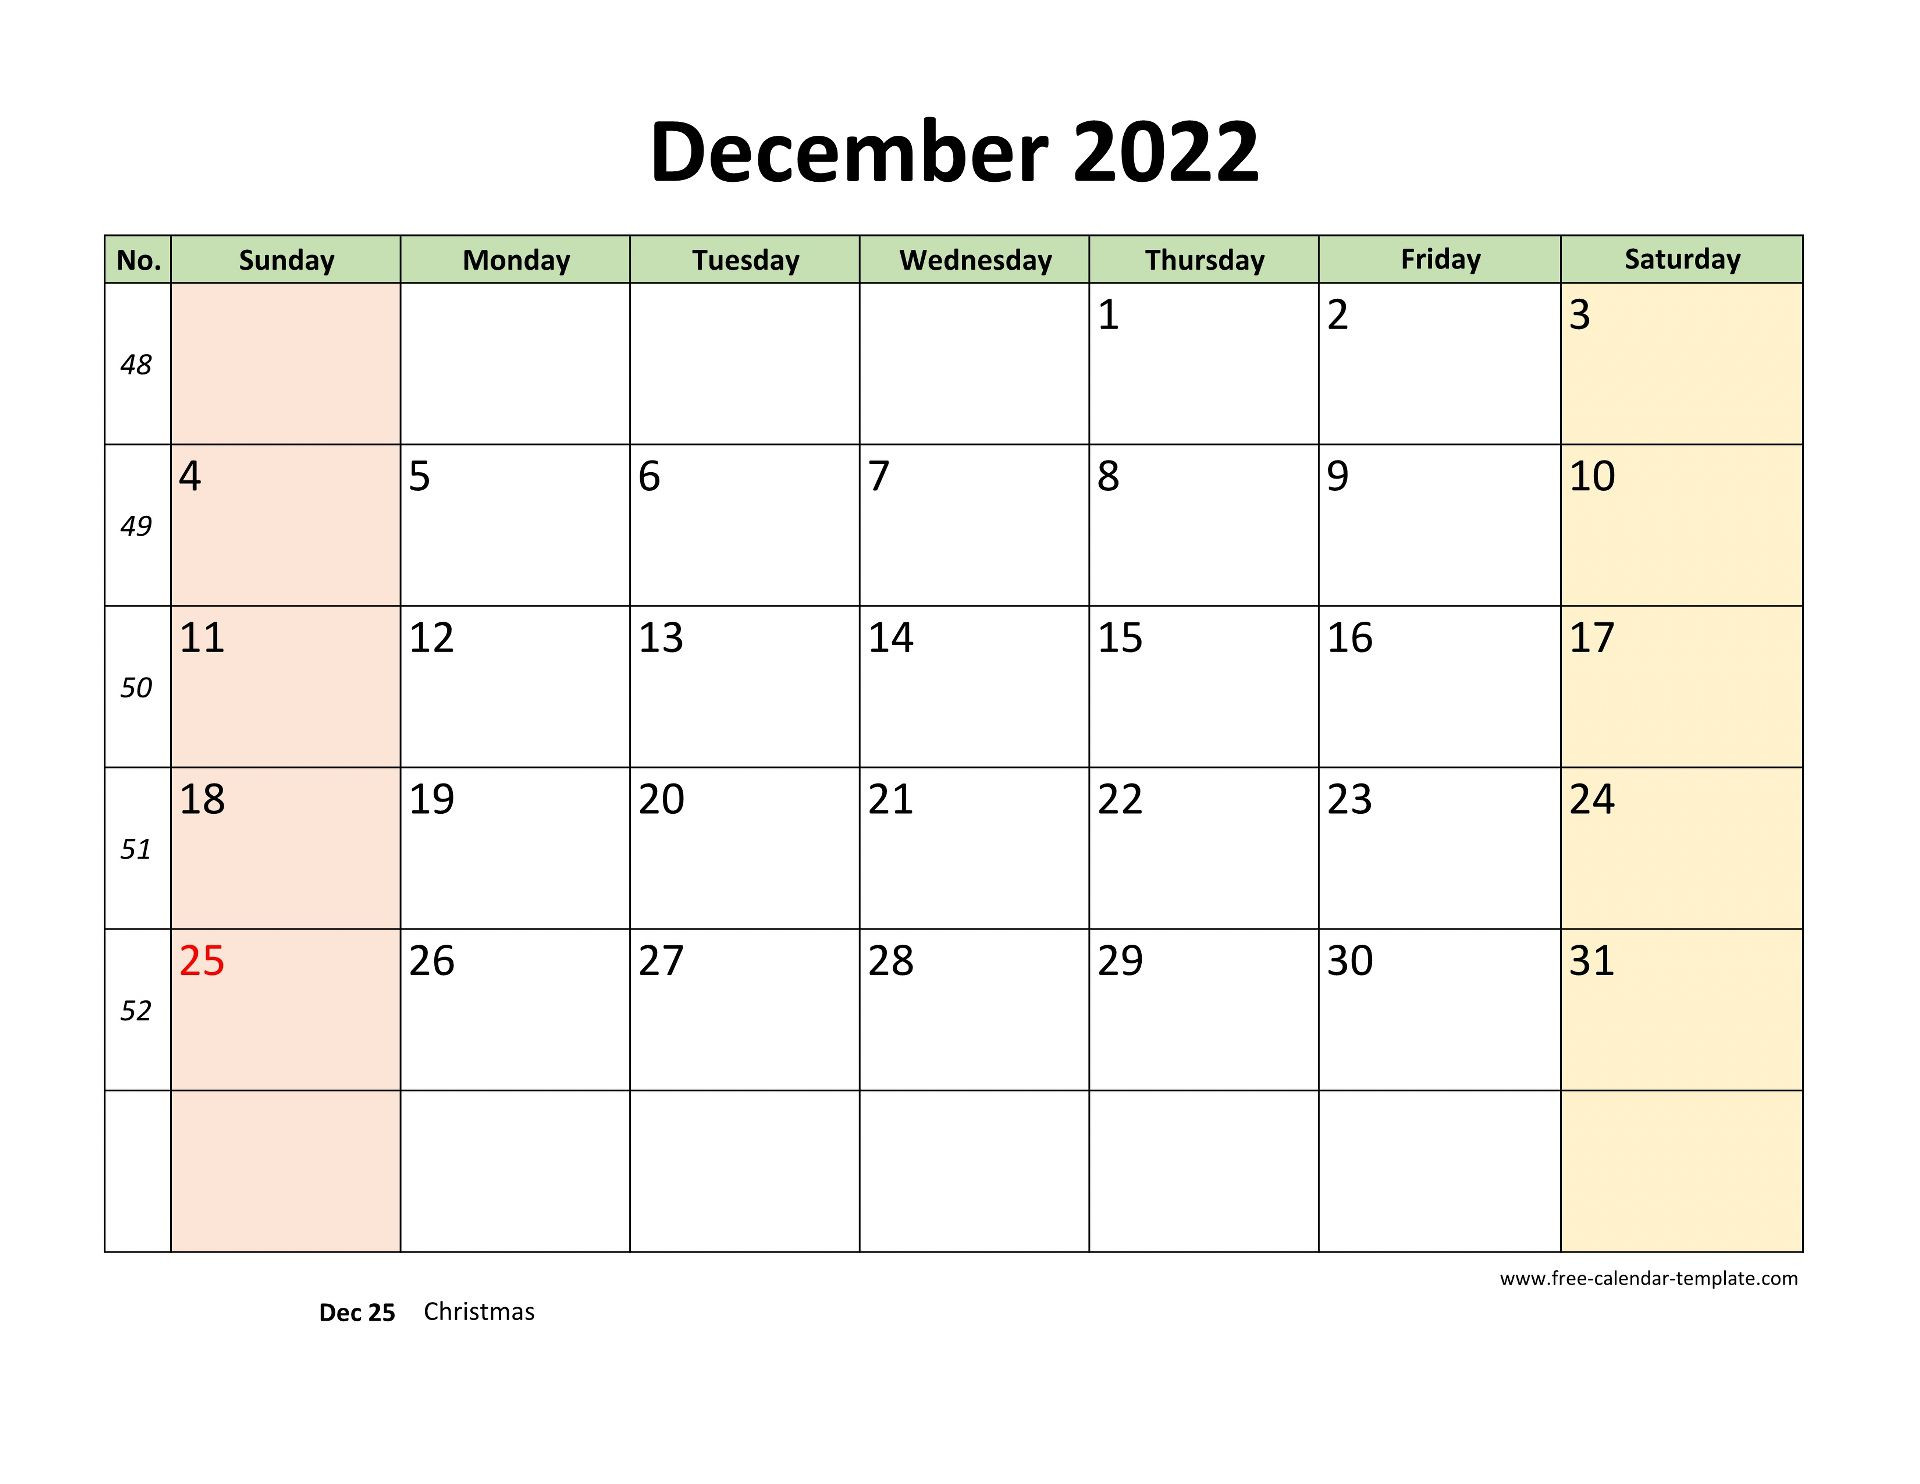 December 2022 Free Calendar Tempplate | Free-Calendar  December 2022 To May 2022 Calendar